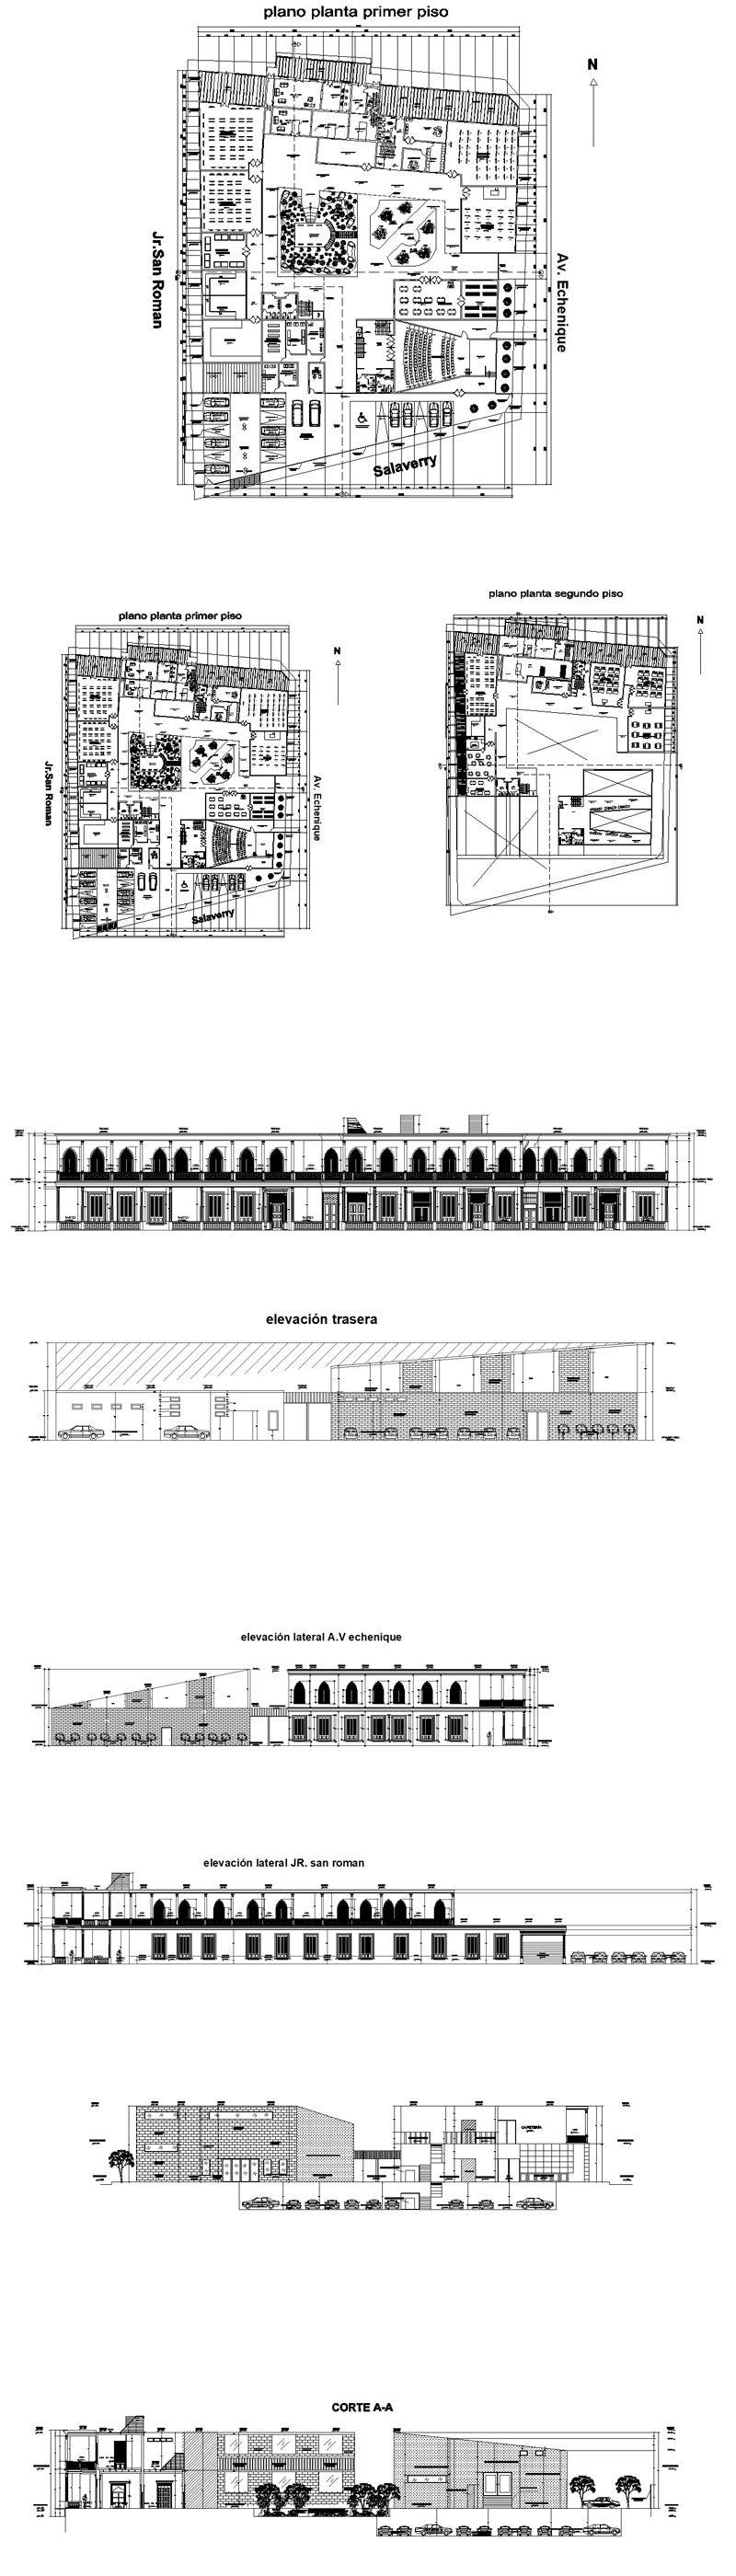 ★【School, University, College,Campus CAD Design Project V.5】@Autocad Blocks,Drawings,CAD Details,Elevation